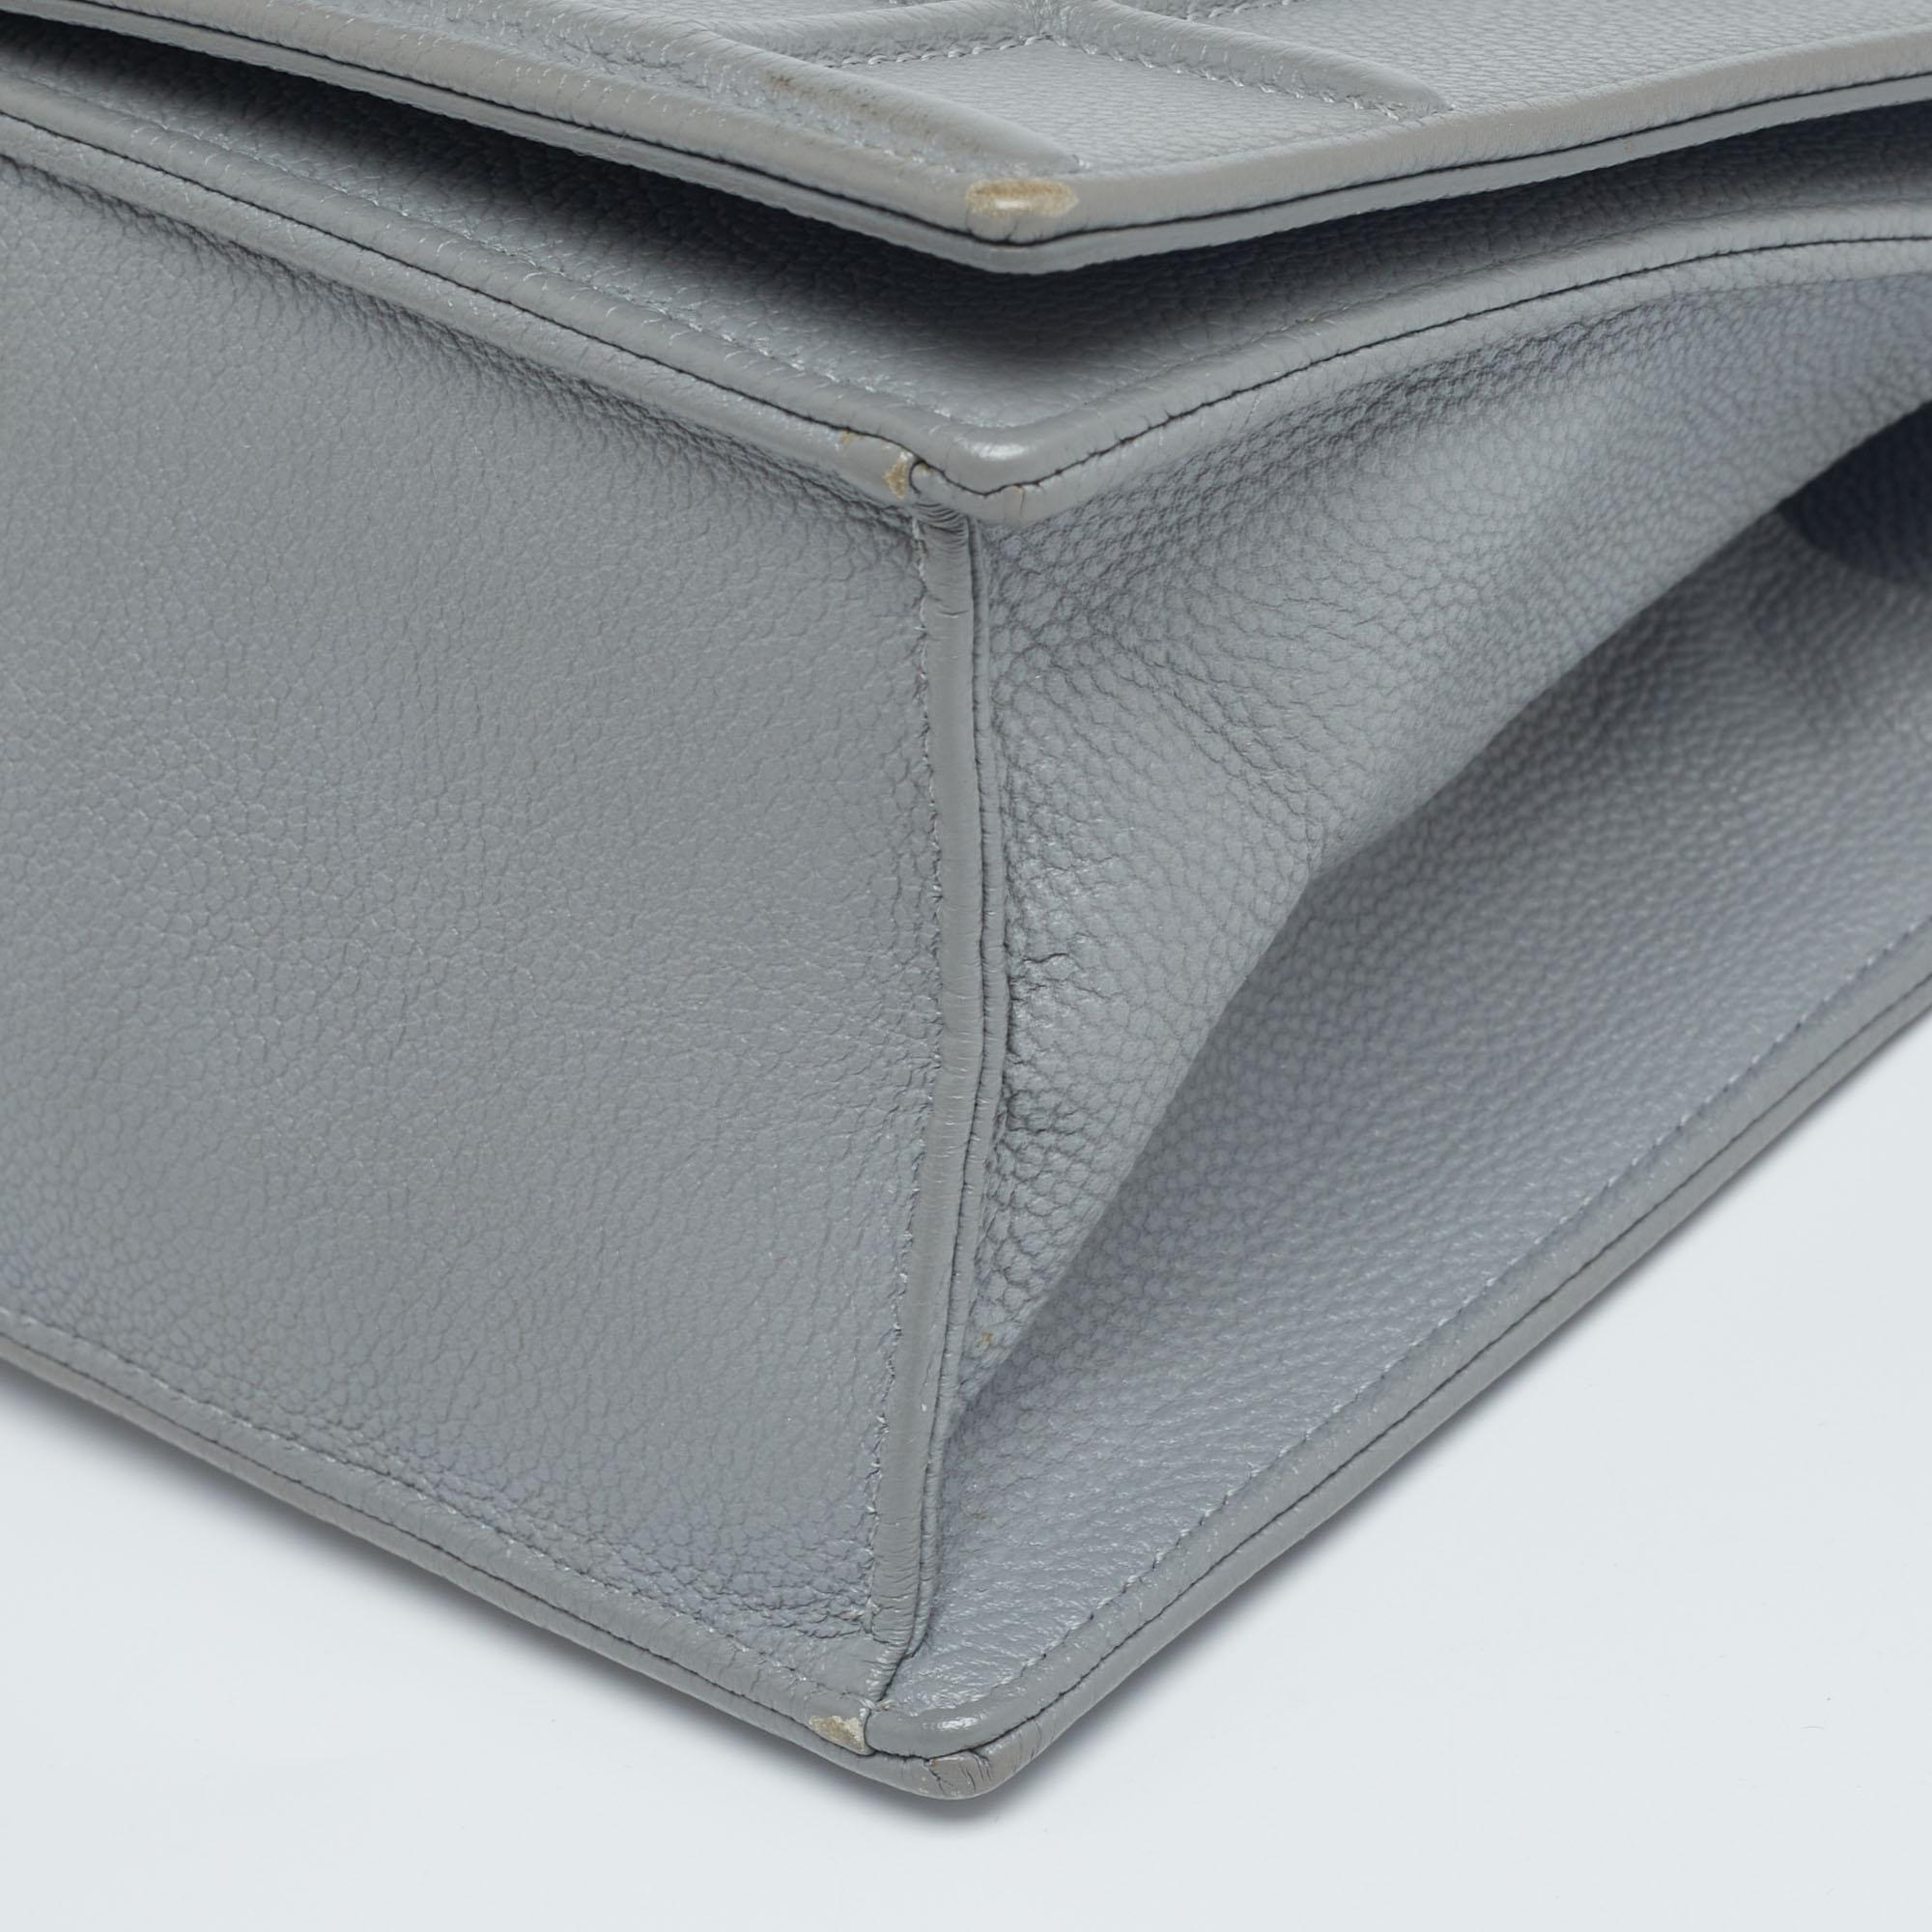 Dior Grey Leather Medium Diorama Flap Shoulder Bag In Good Condition In Dubai, Al Qouz 2